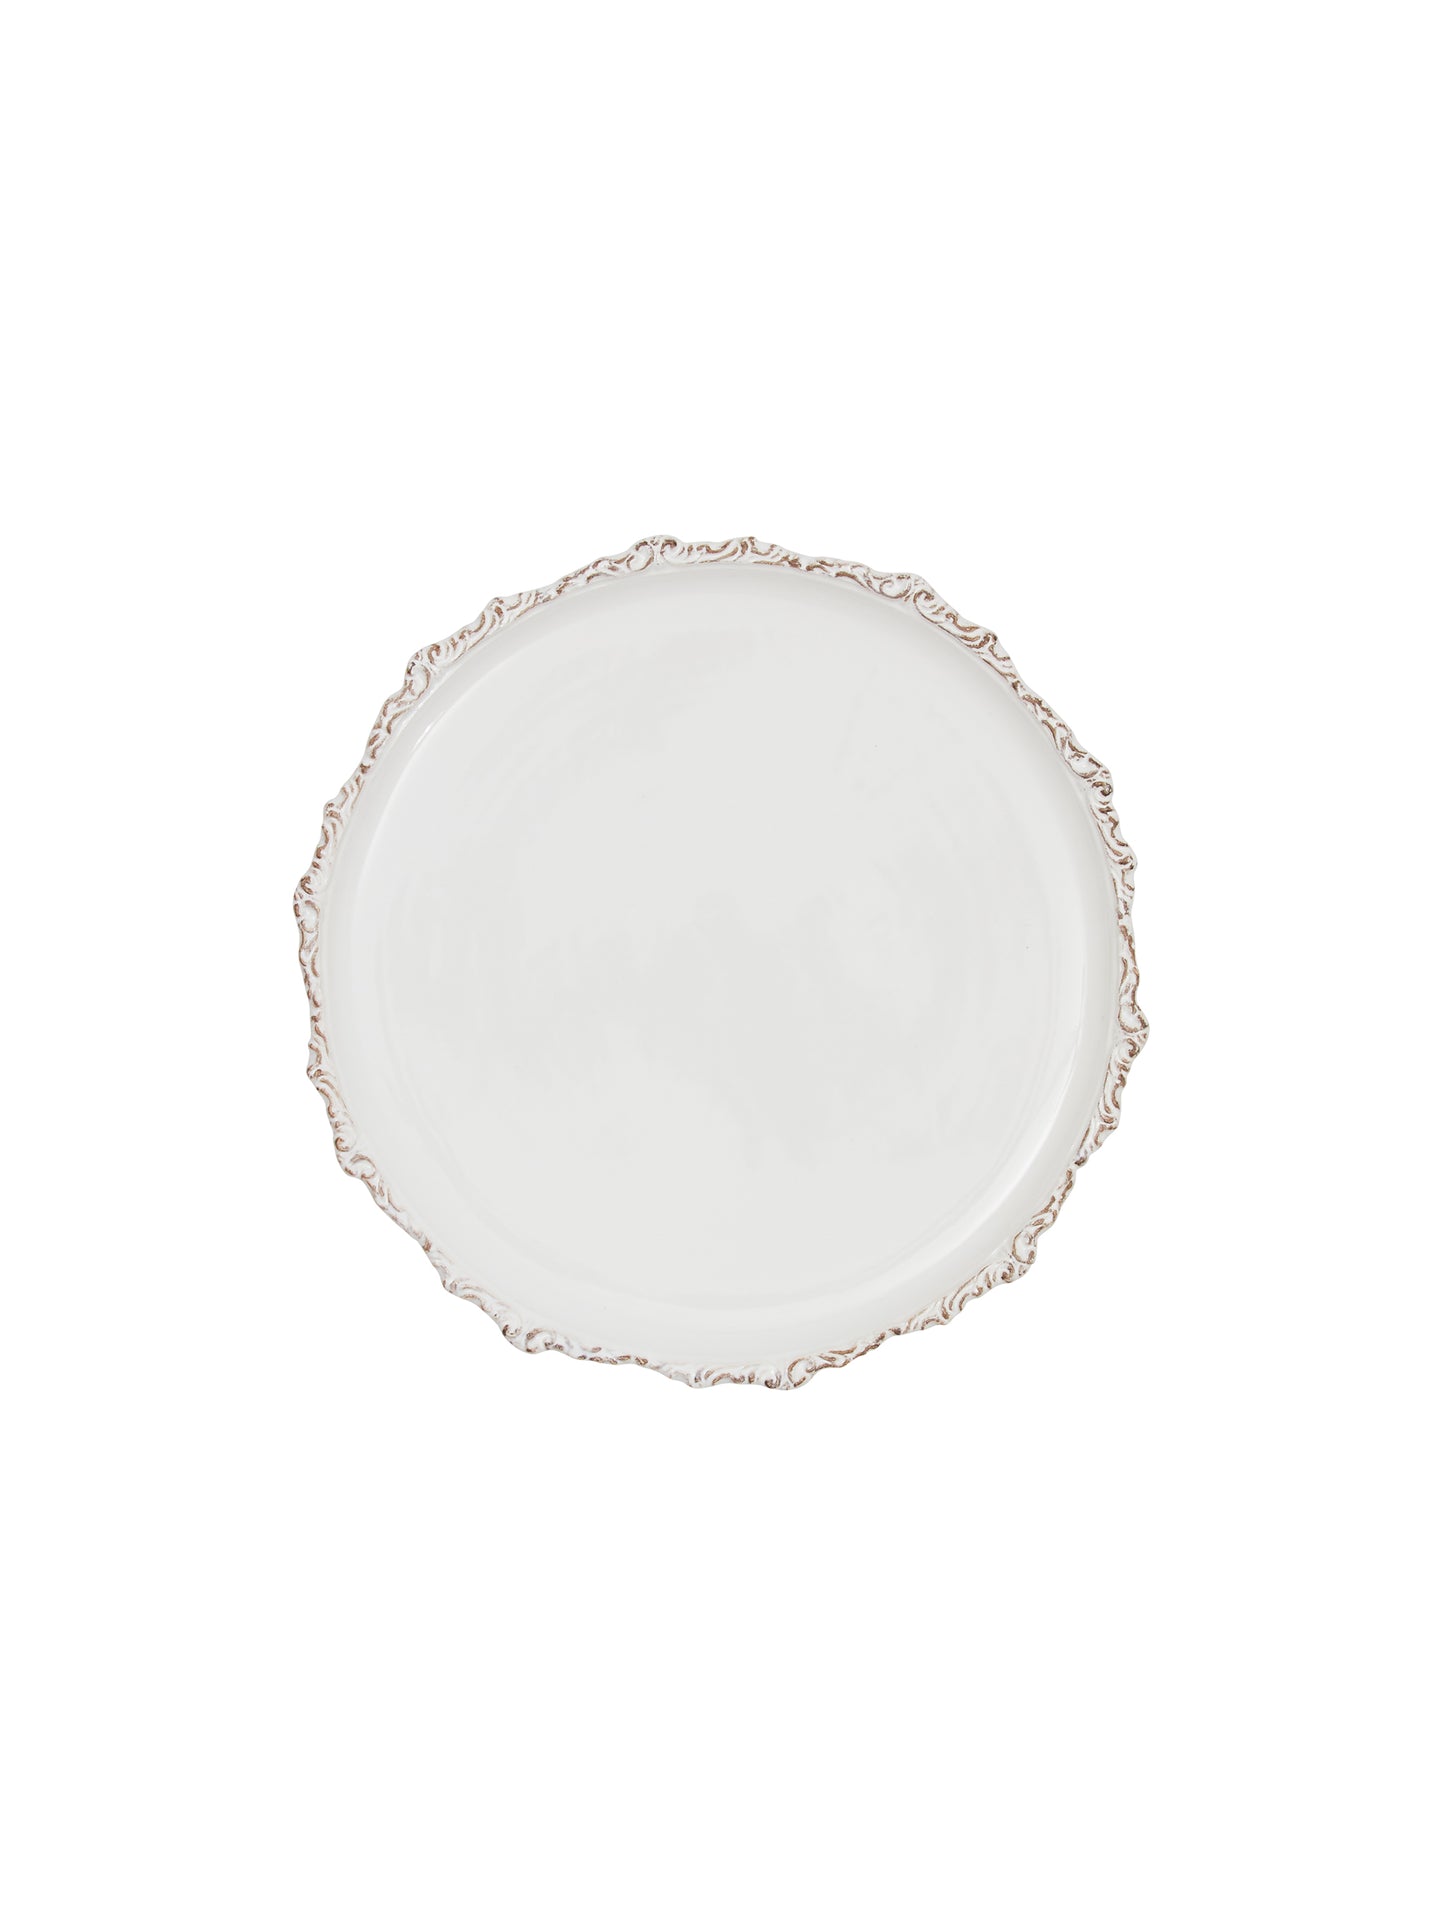 Arte Italica  Imperial White Salad Plate Weston Table